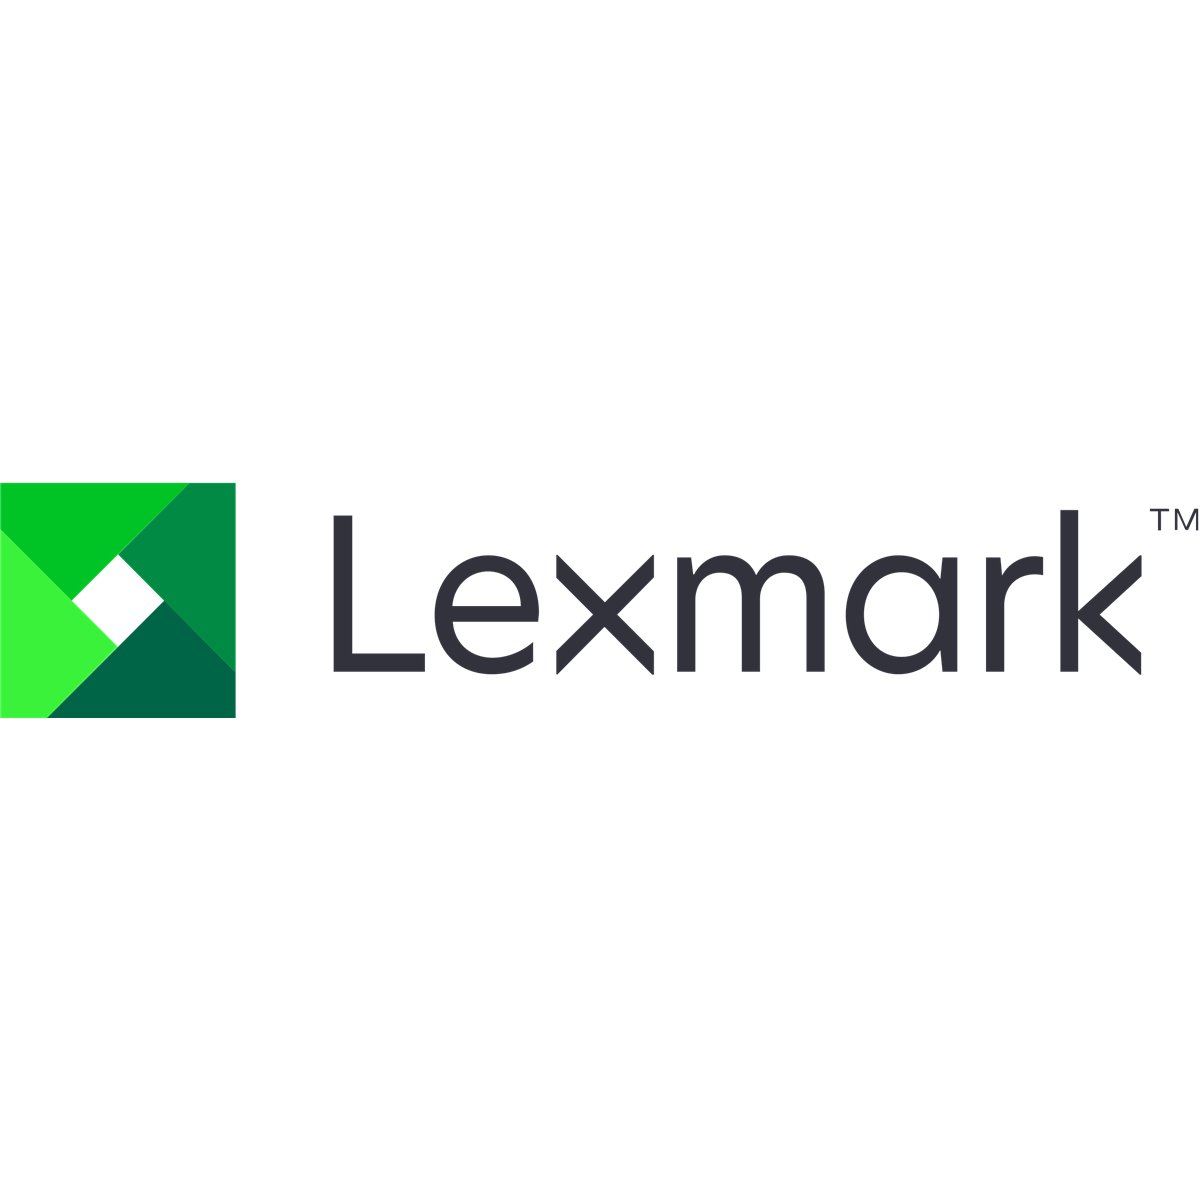 Lexmark MX71x SVC Op panelsCntrl Pnl Kit